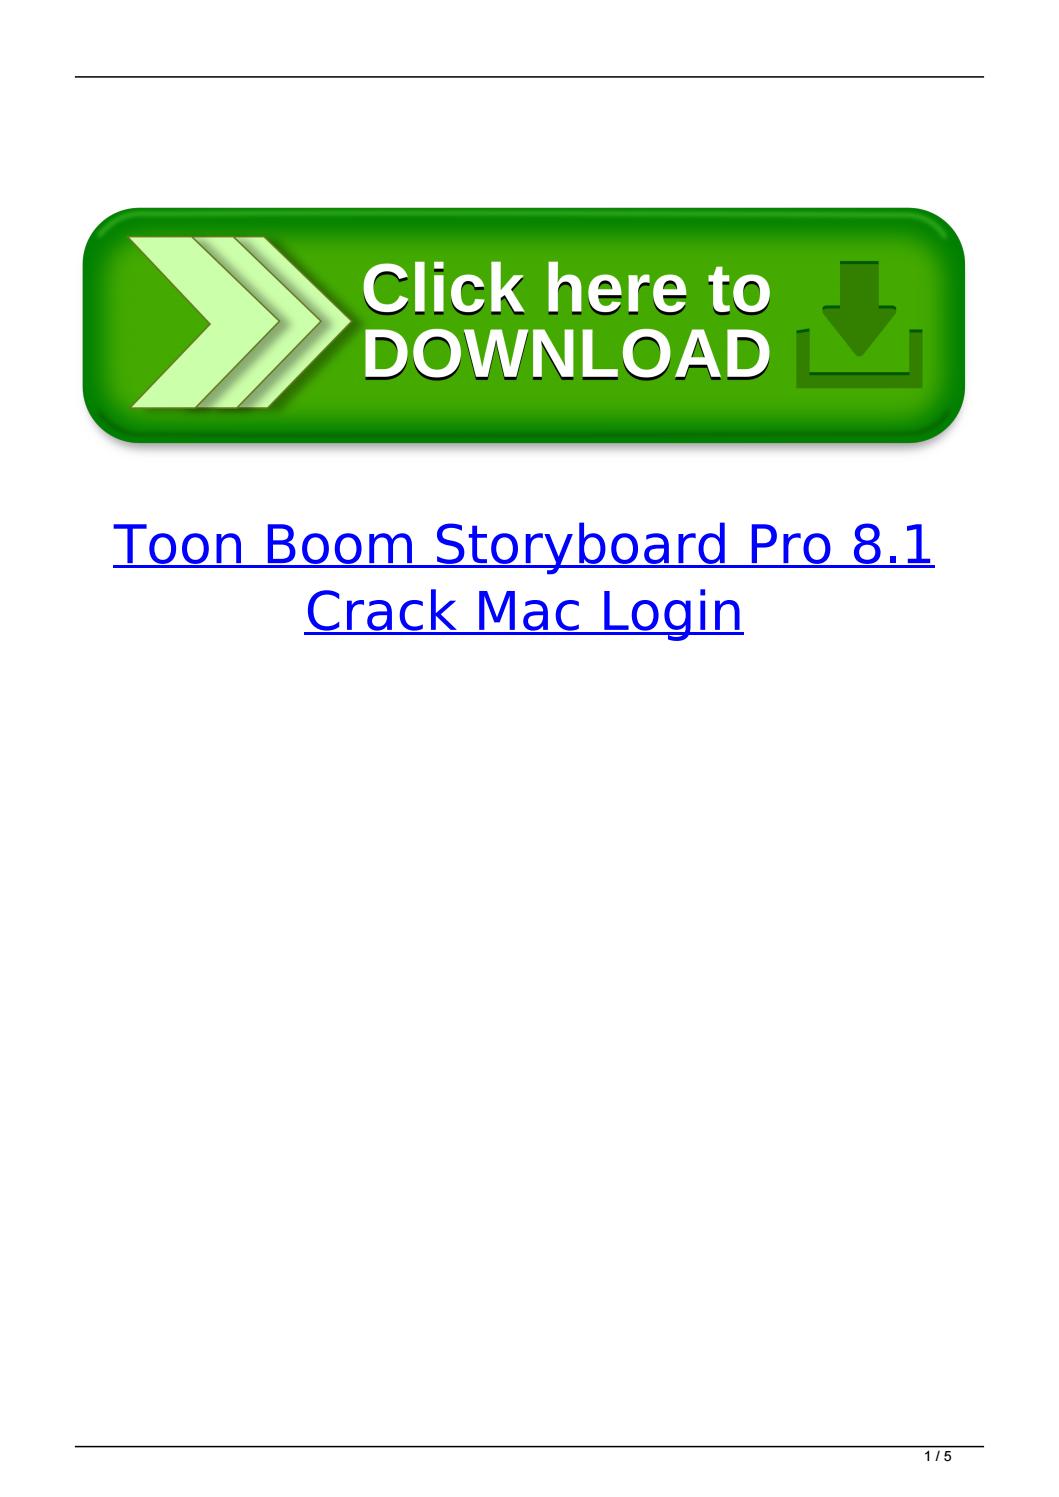 toon boom storyboard pro 5 download